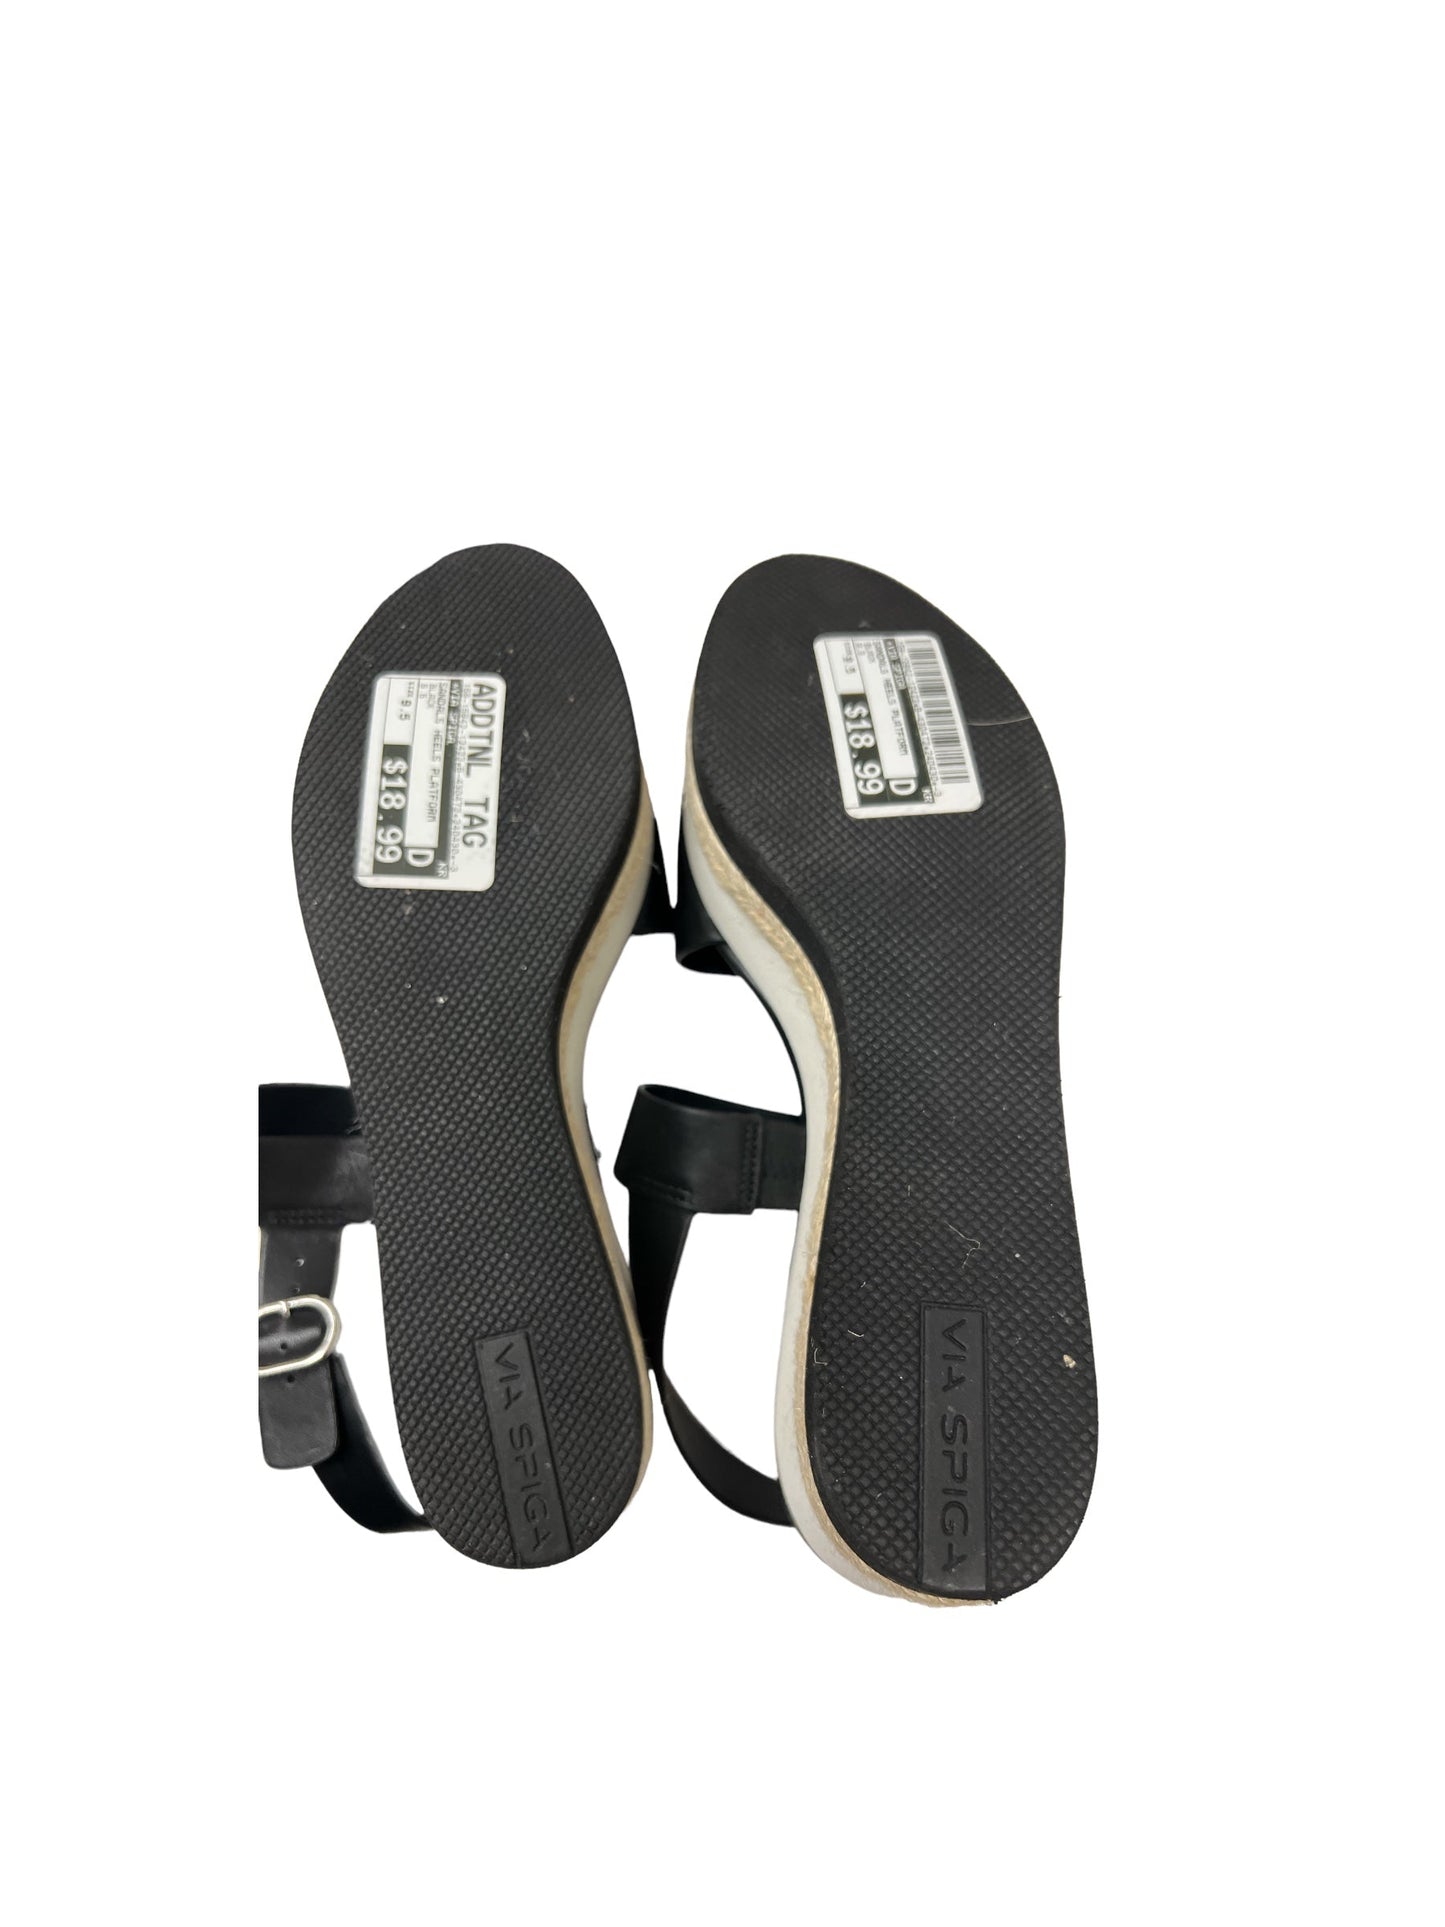 Sandals Heels Platform By Via Spiga  Size: 9.5